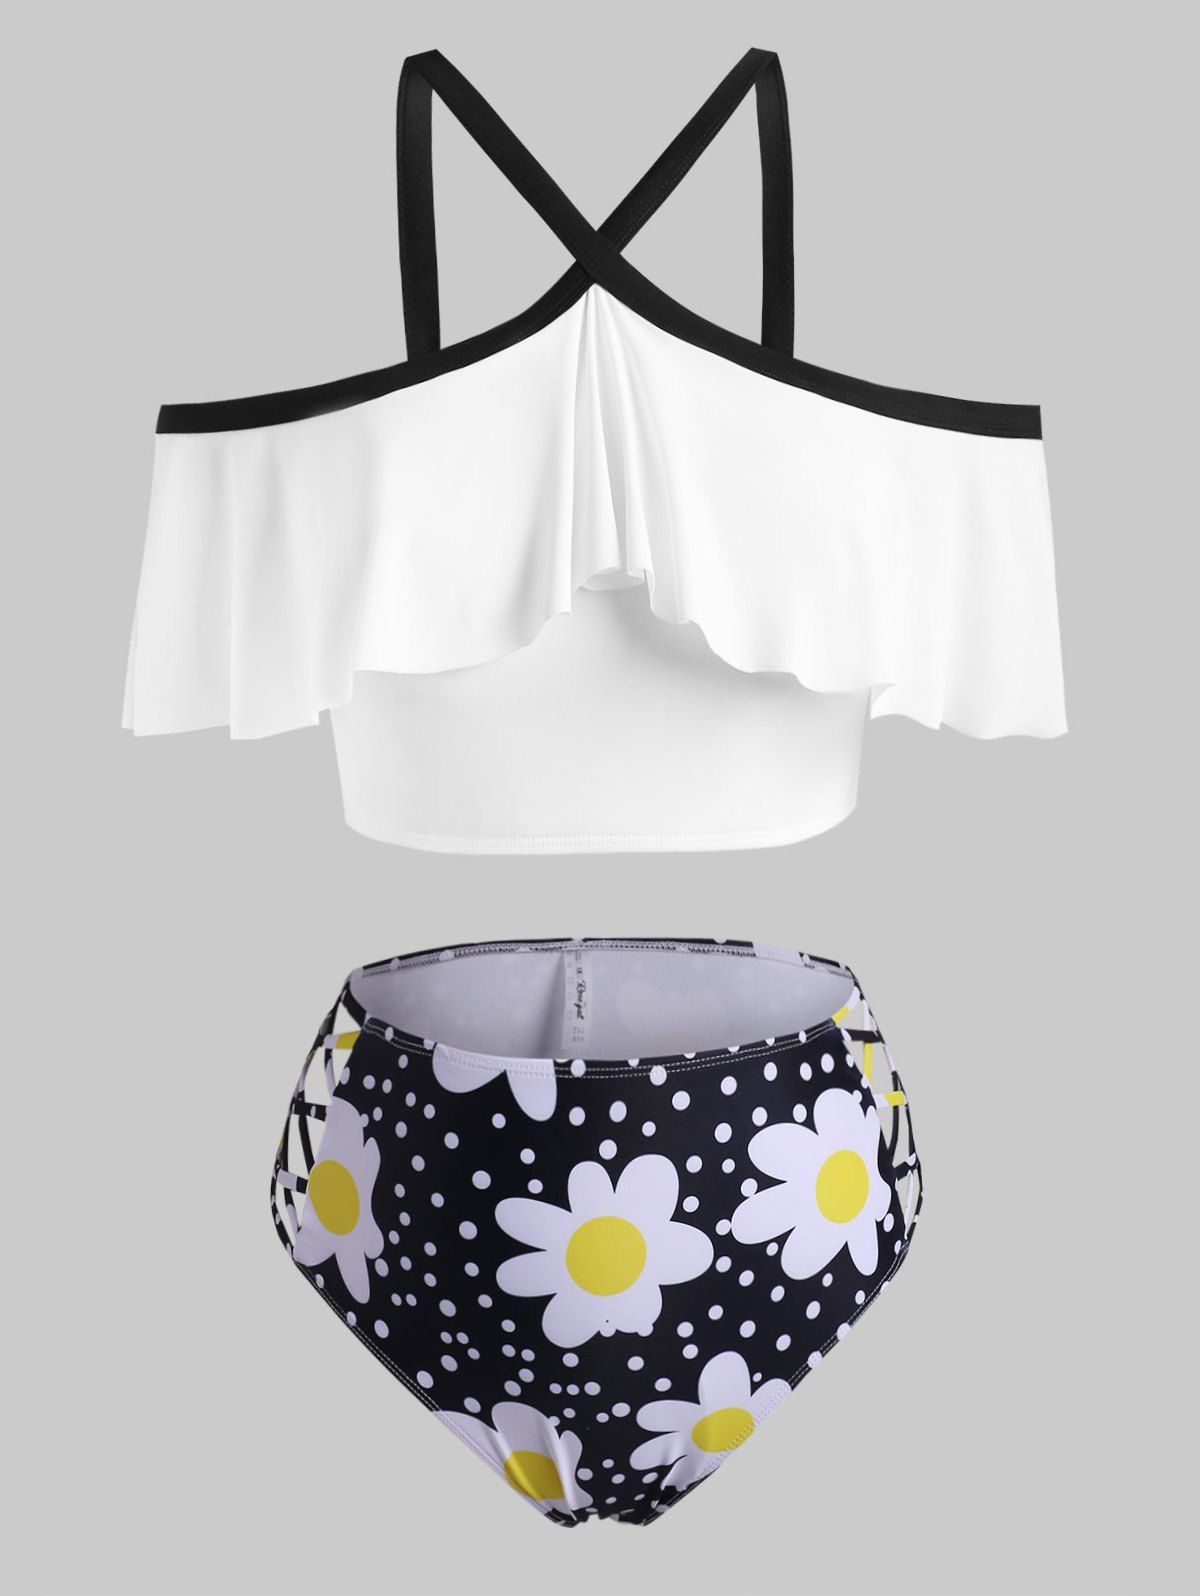 Ruffles Open Shoulder Daisy Dotted Lattice Plus Size Tankini Swimwear - BLACK 5X